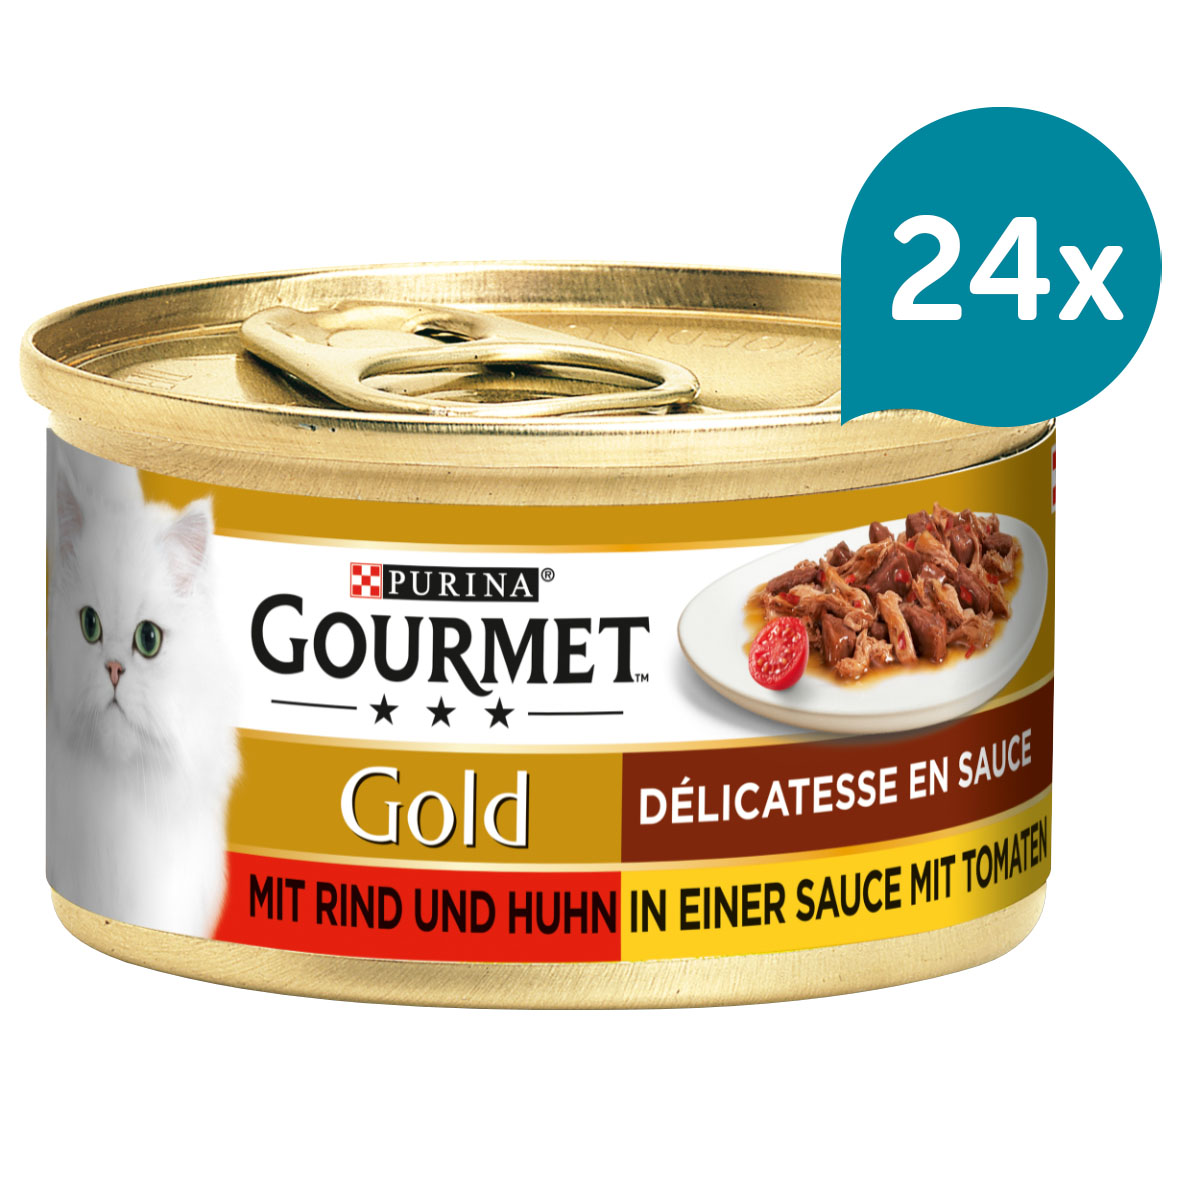 Gourmet Gold Délicatesse en Sauce hovězí a kuřecí